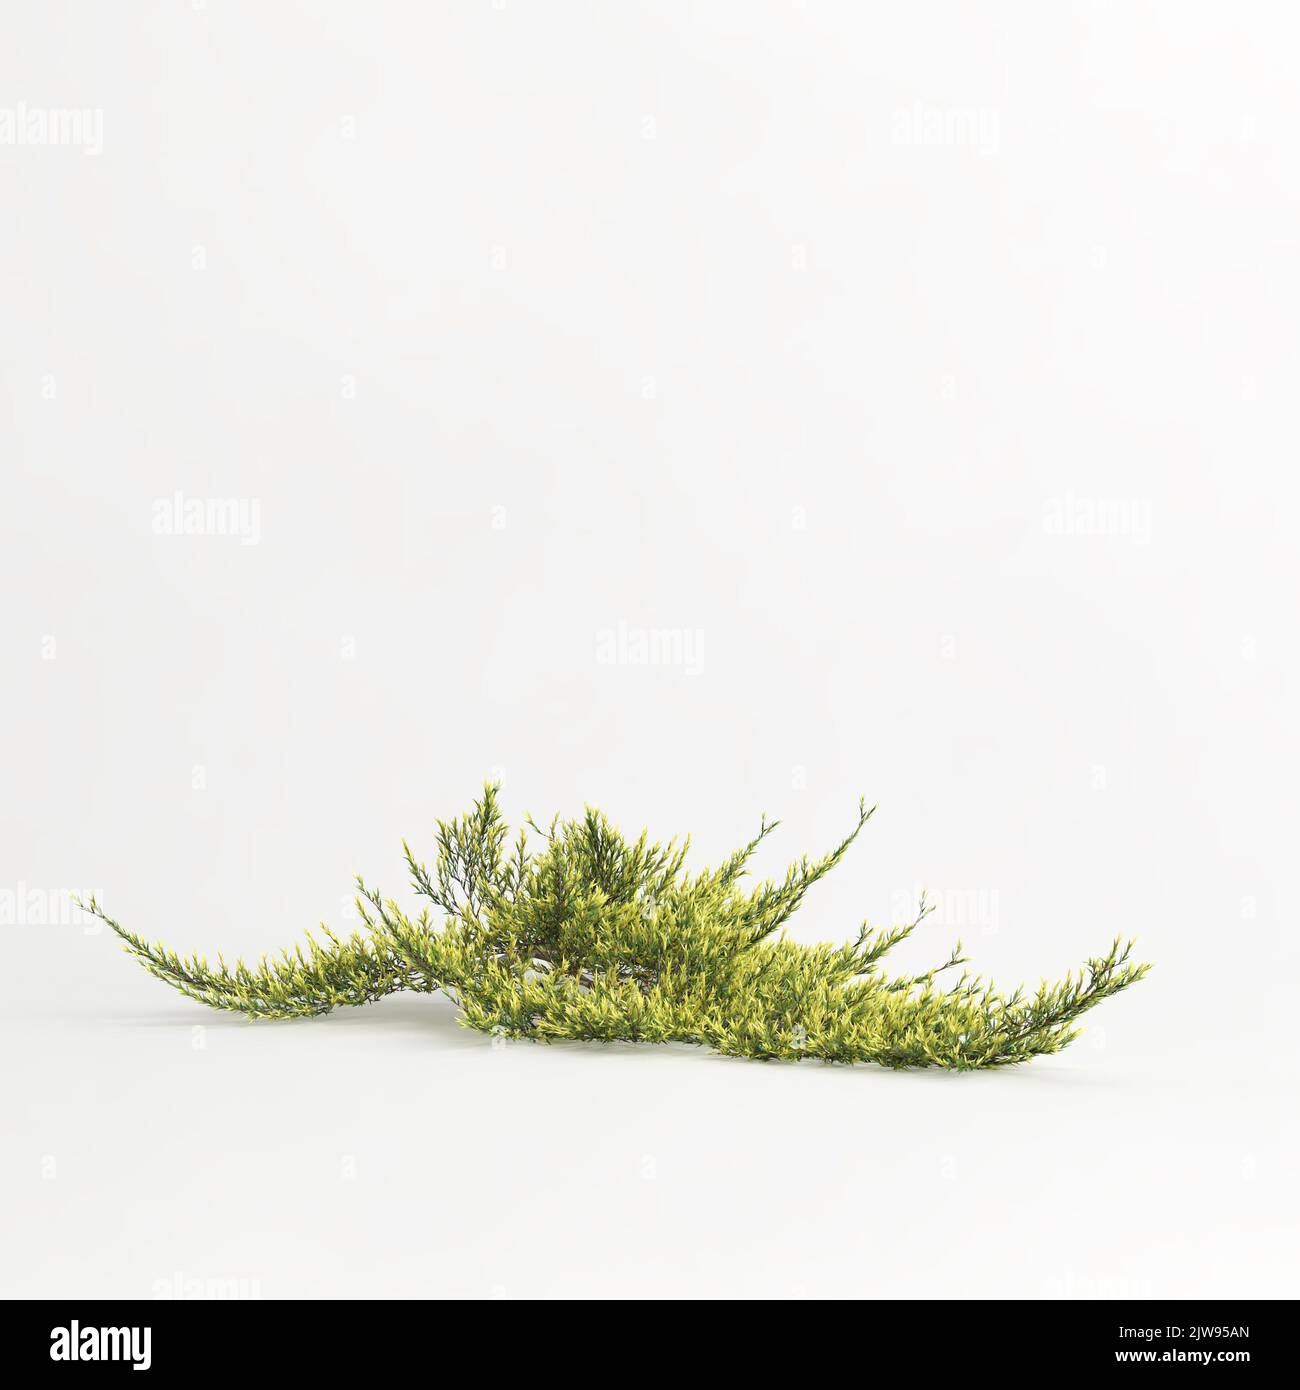 3d illustration of juniperus horizontalis golden carpet tree isolated on white background Stock Photo